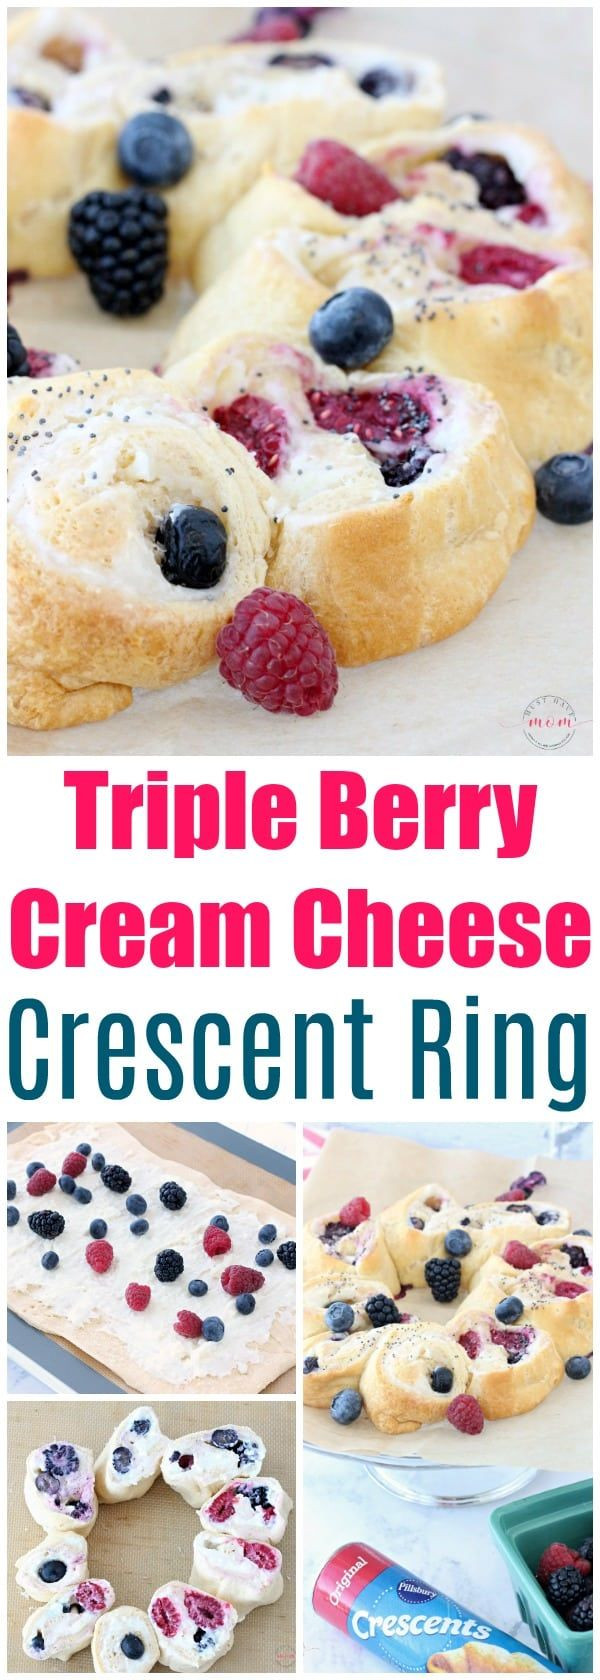 Pillsbury Crescent Roll Breakfast Recipes
 Triple berry cream cheese Pillsbury crescent roll